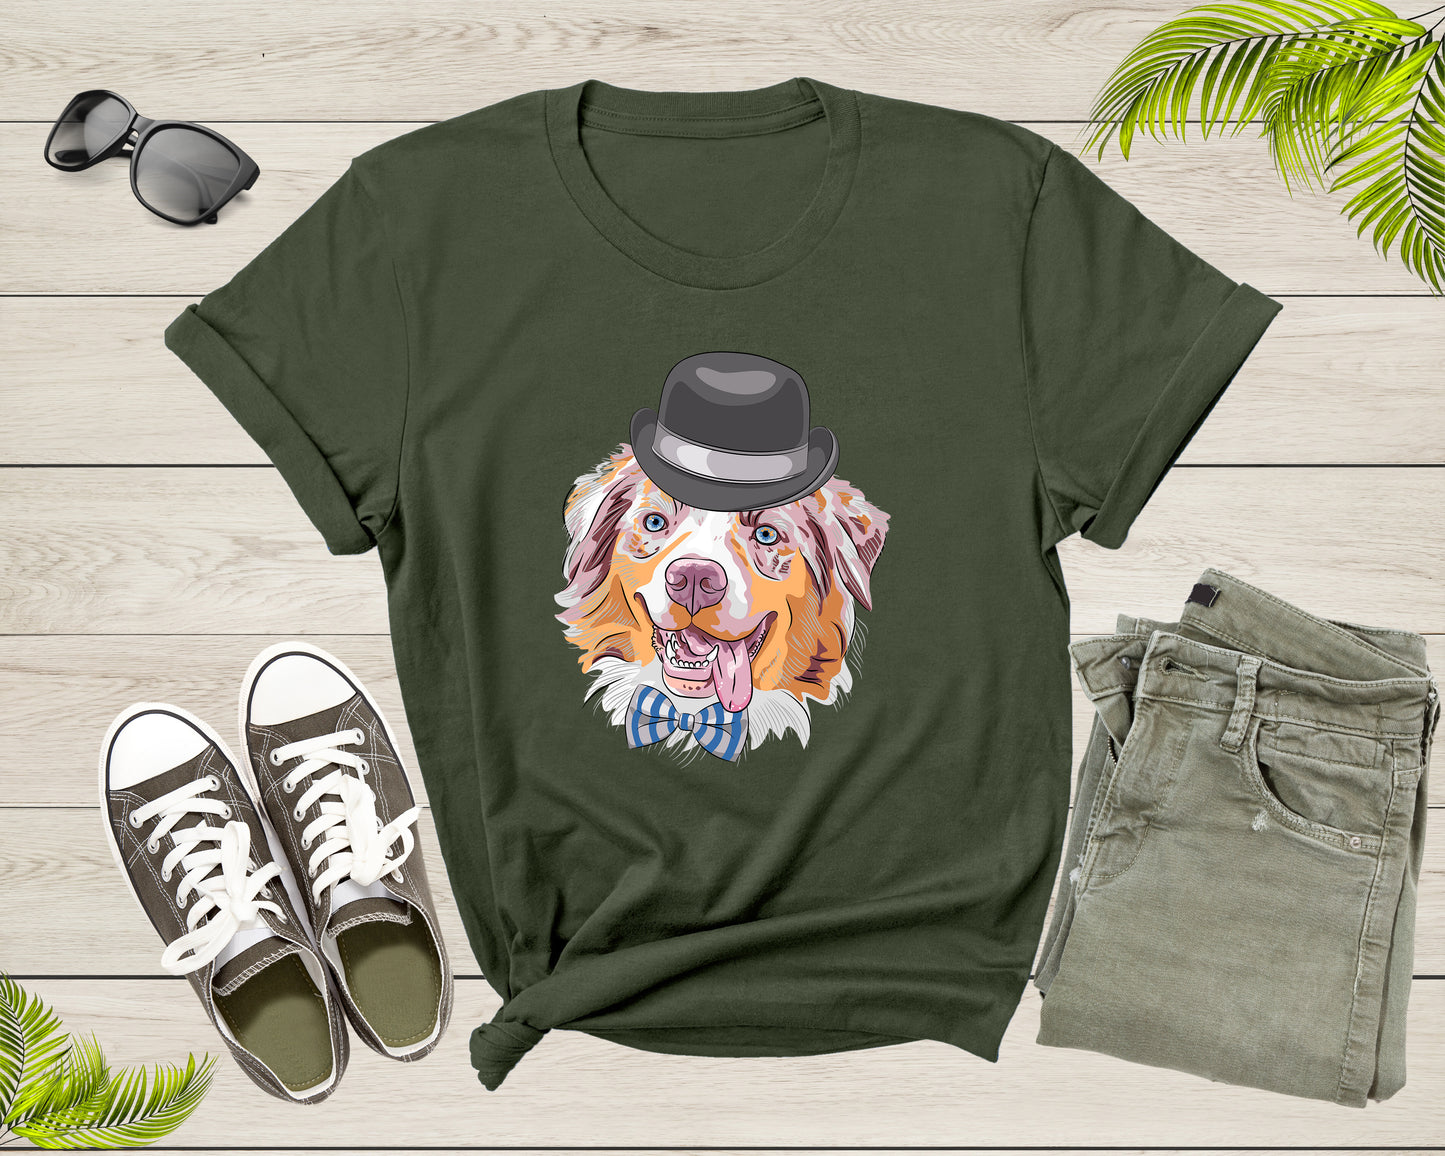 Funny Cute Pet Dog Doggie Puppy Animal Wearing Black Hat T-Shirt Dog Puppy Lover Gift T Shirt for Men Women Kids Boys Girls Graphic Tshirt